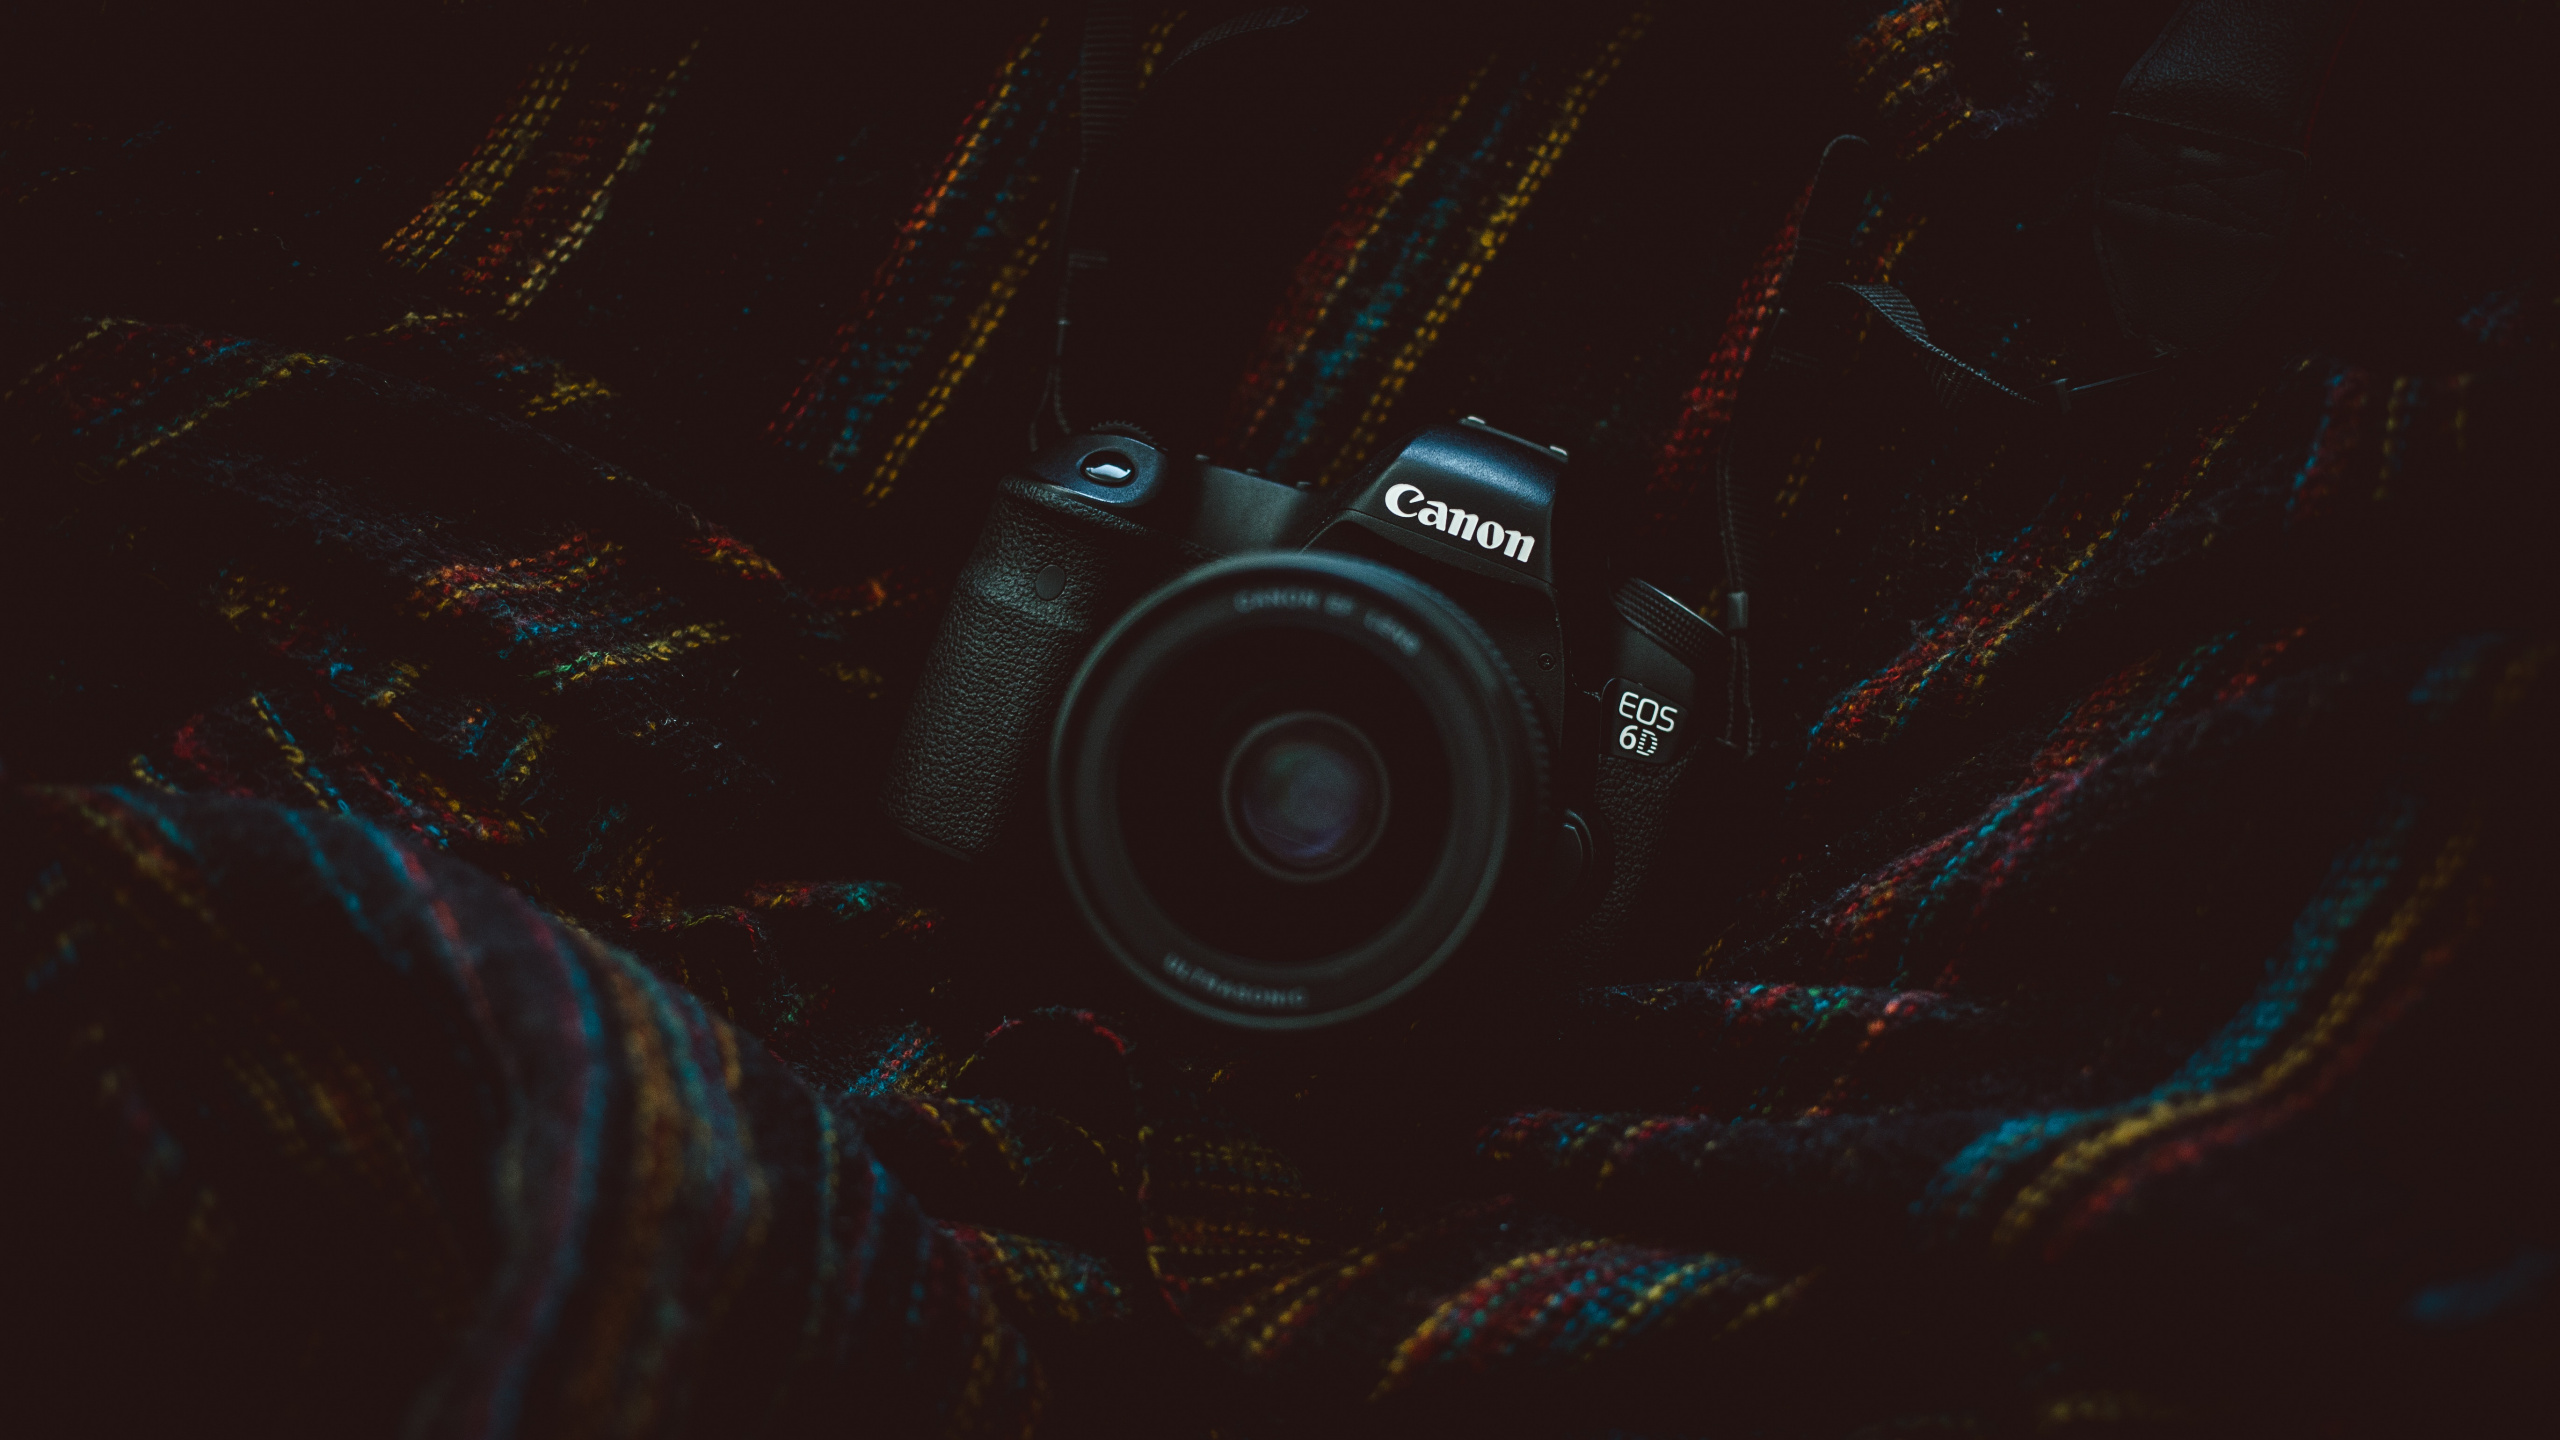 Black Nikon Dslr Camera on Black and Brown Textile. Wallpaper in 2560x1440 Resolution